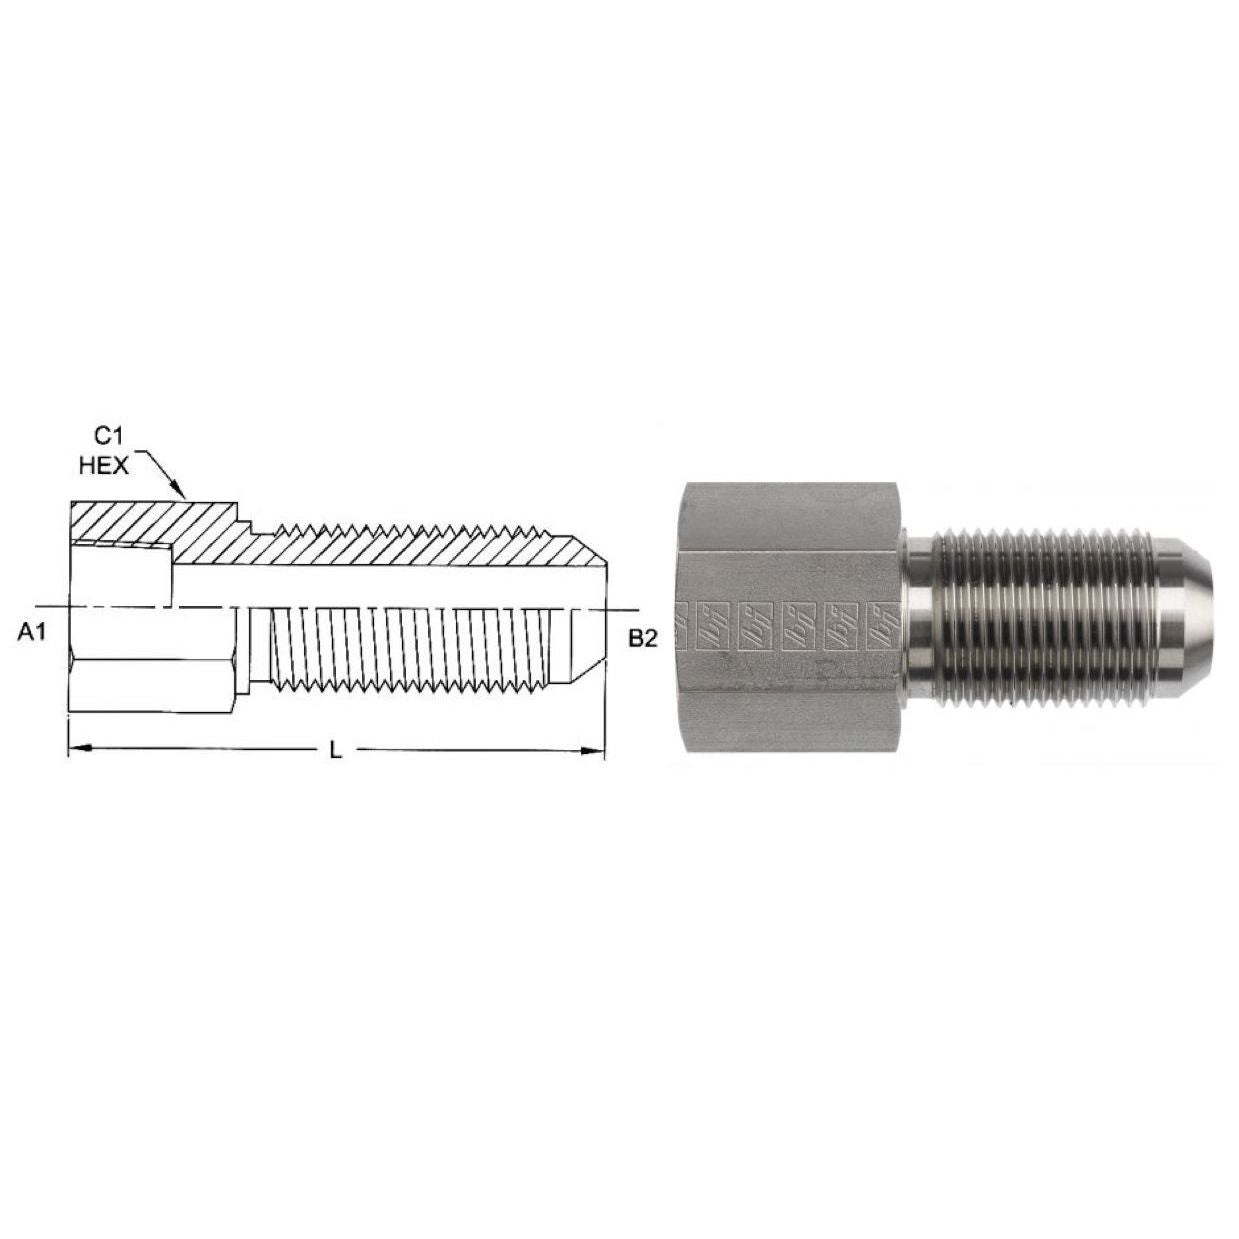 2705-12-14 : OneHydraulics Bulkhead Adapter, Straight, 0.75 (3/4") JIC JIC x 0.875 (7/8") Male, Steel, 4000psi